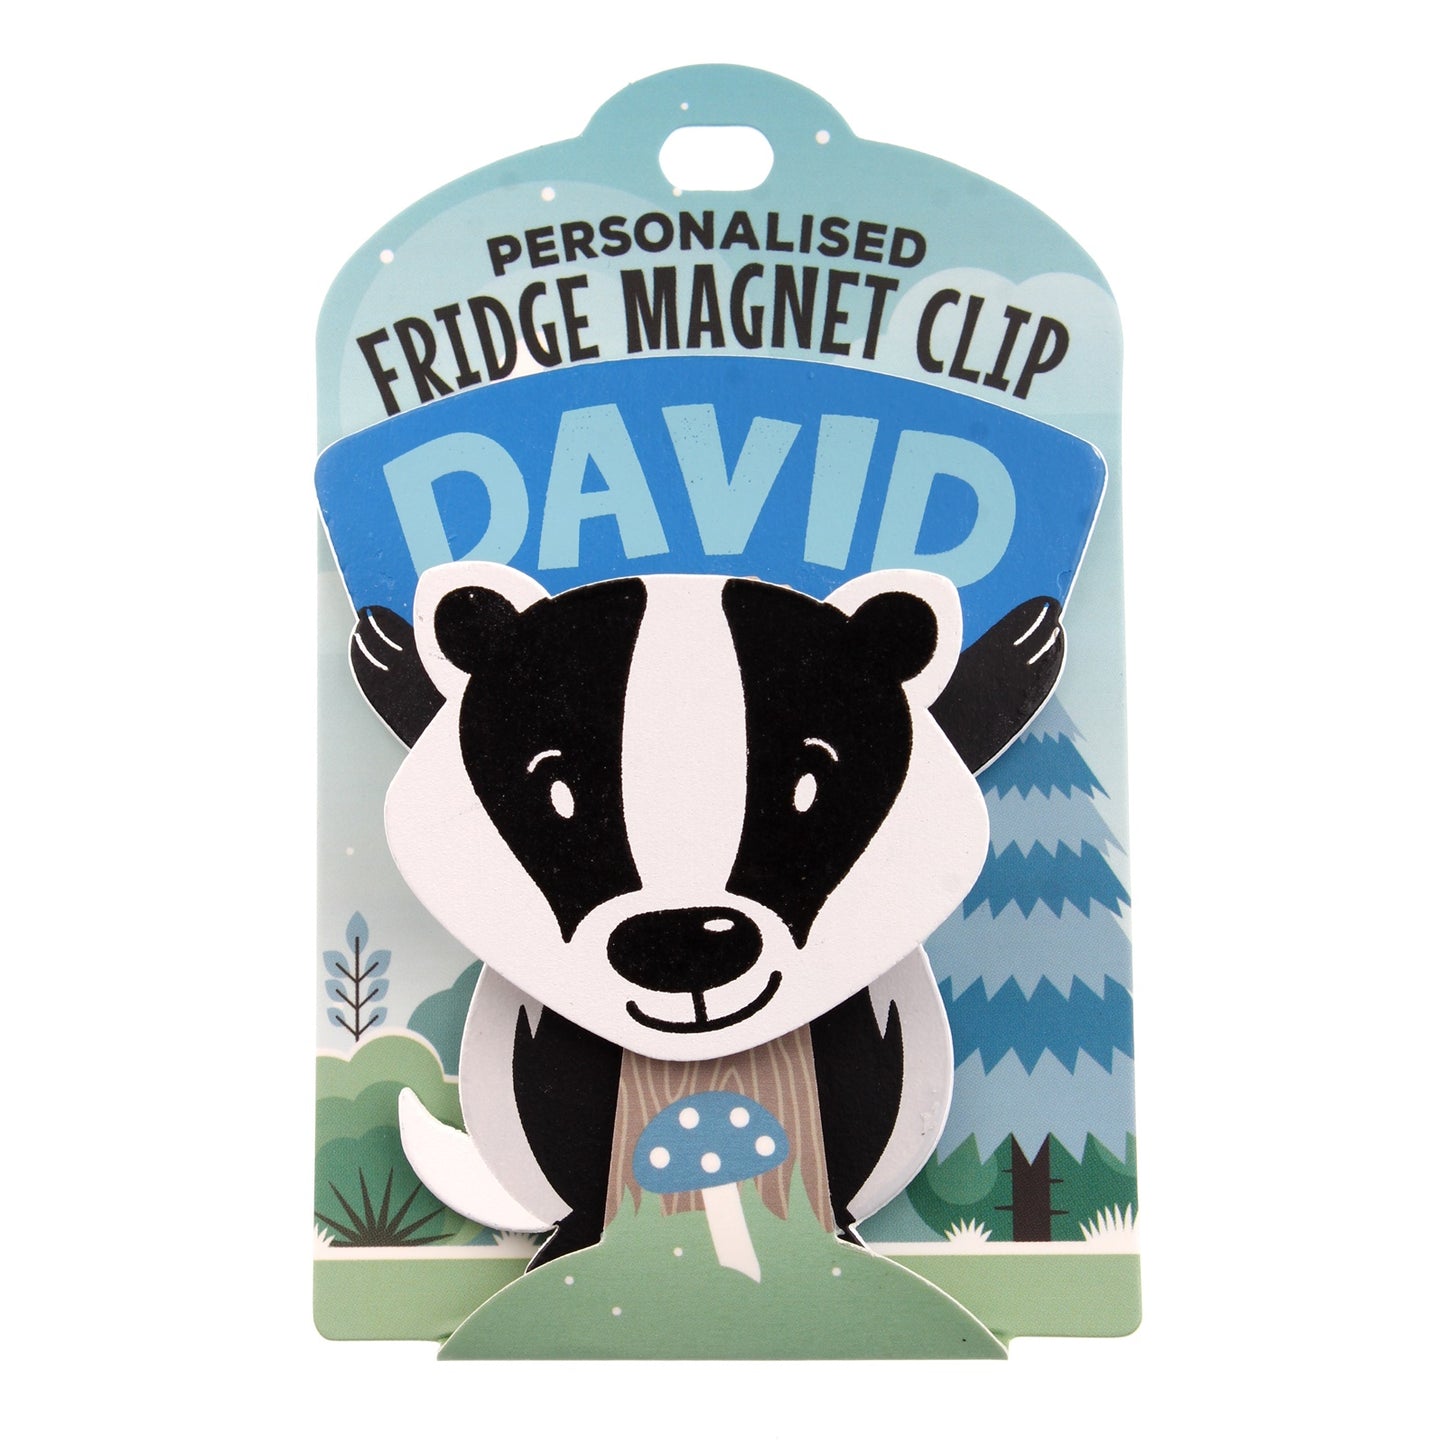 Fridge Magnet Clip David